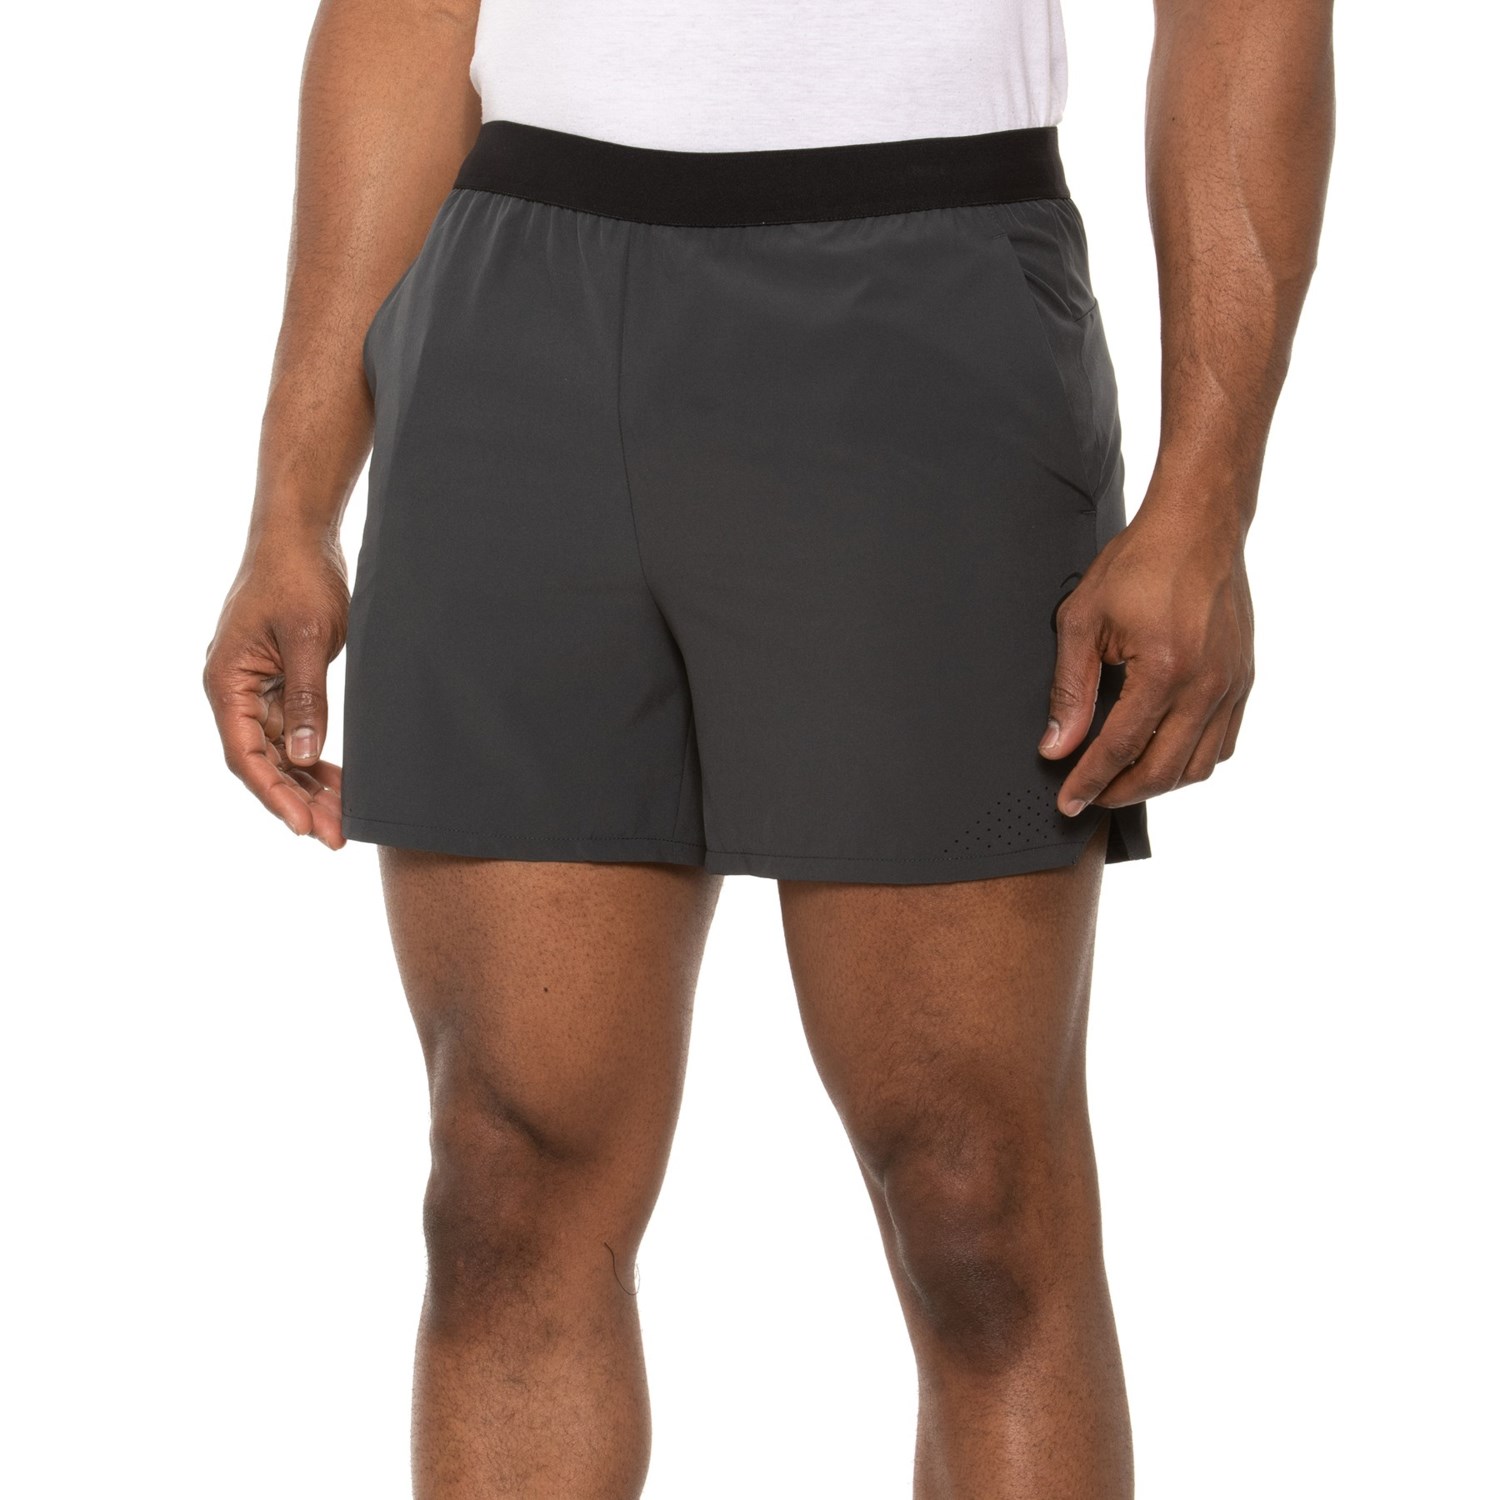 ASICS Unlined Training Shorts (For Men) - Save 43%